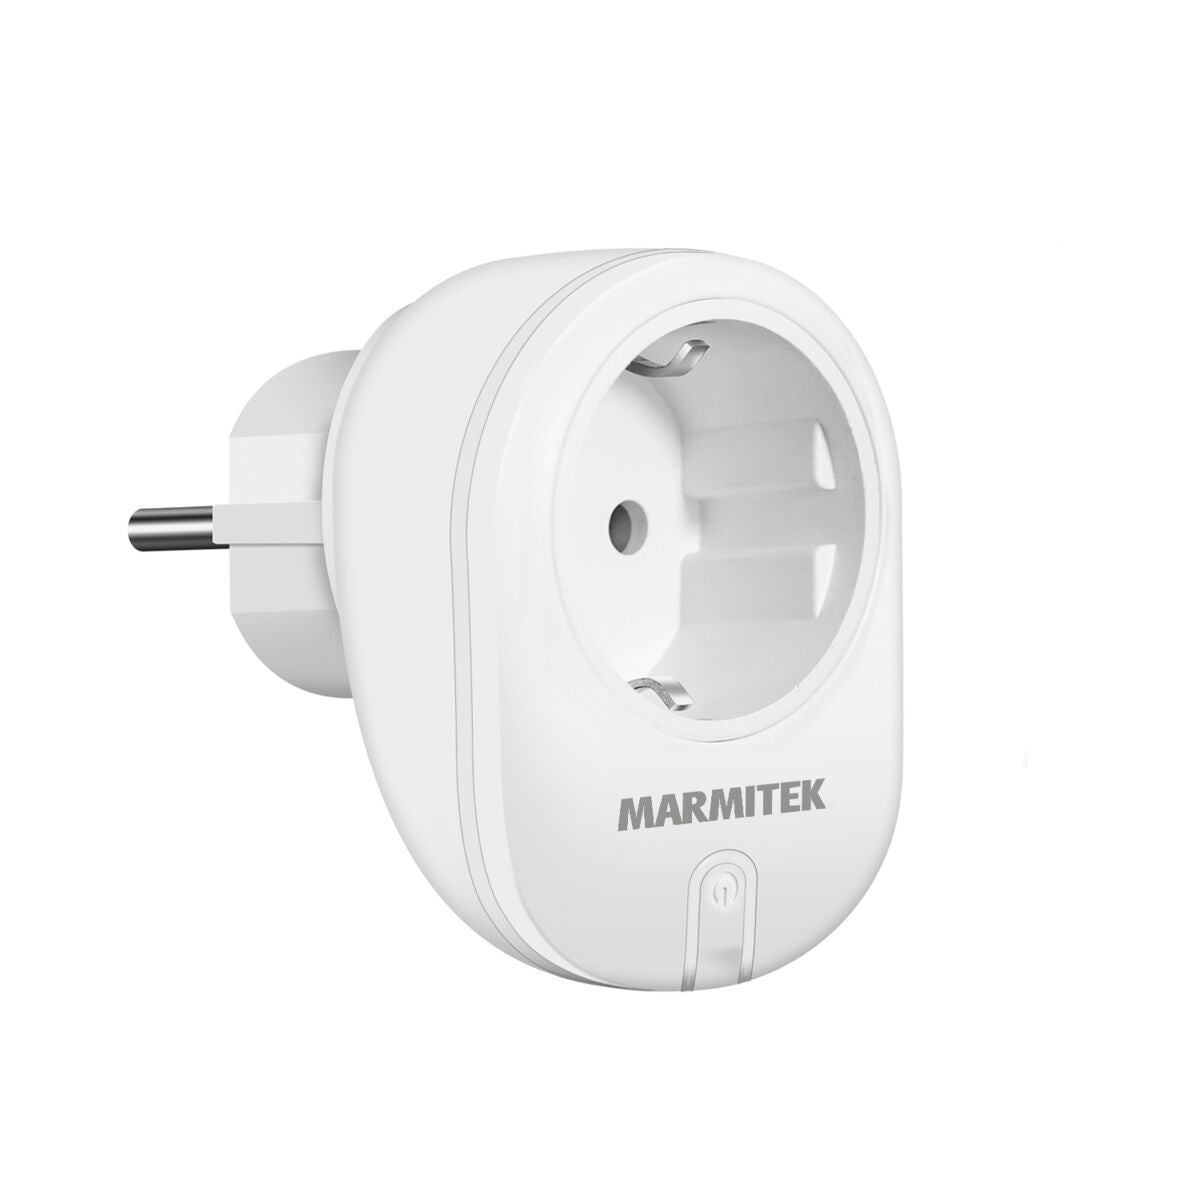 Power SE - Power plug - Side View Image with angle | Marmitek